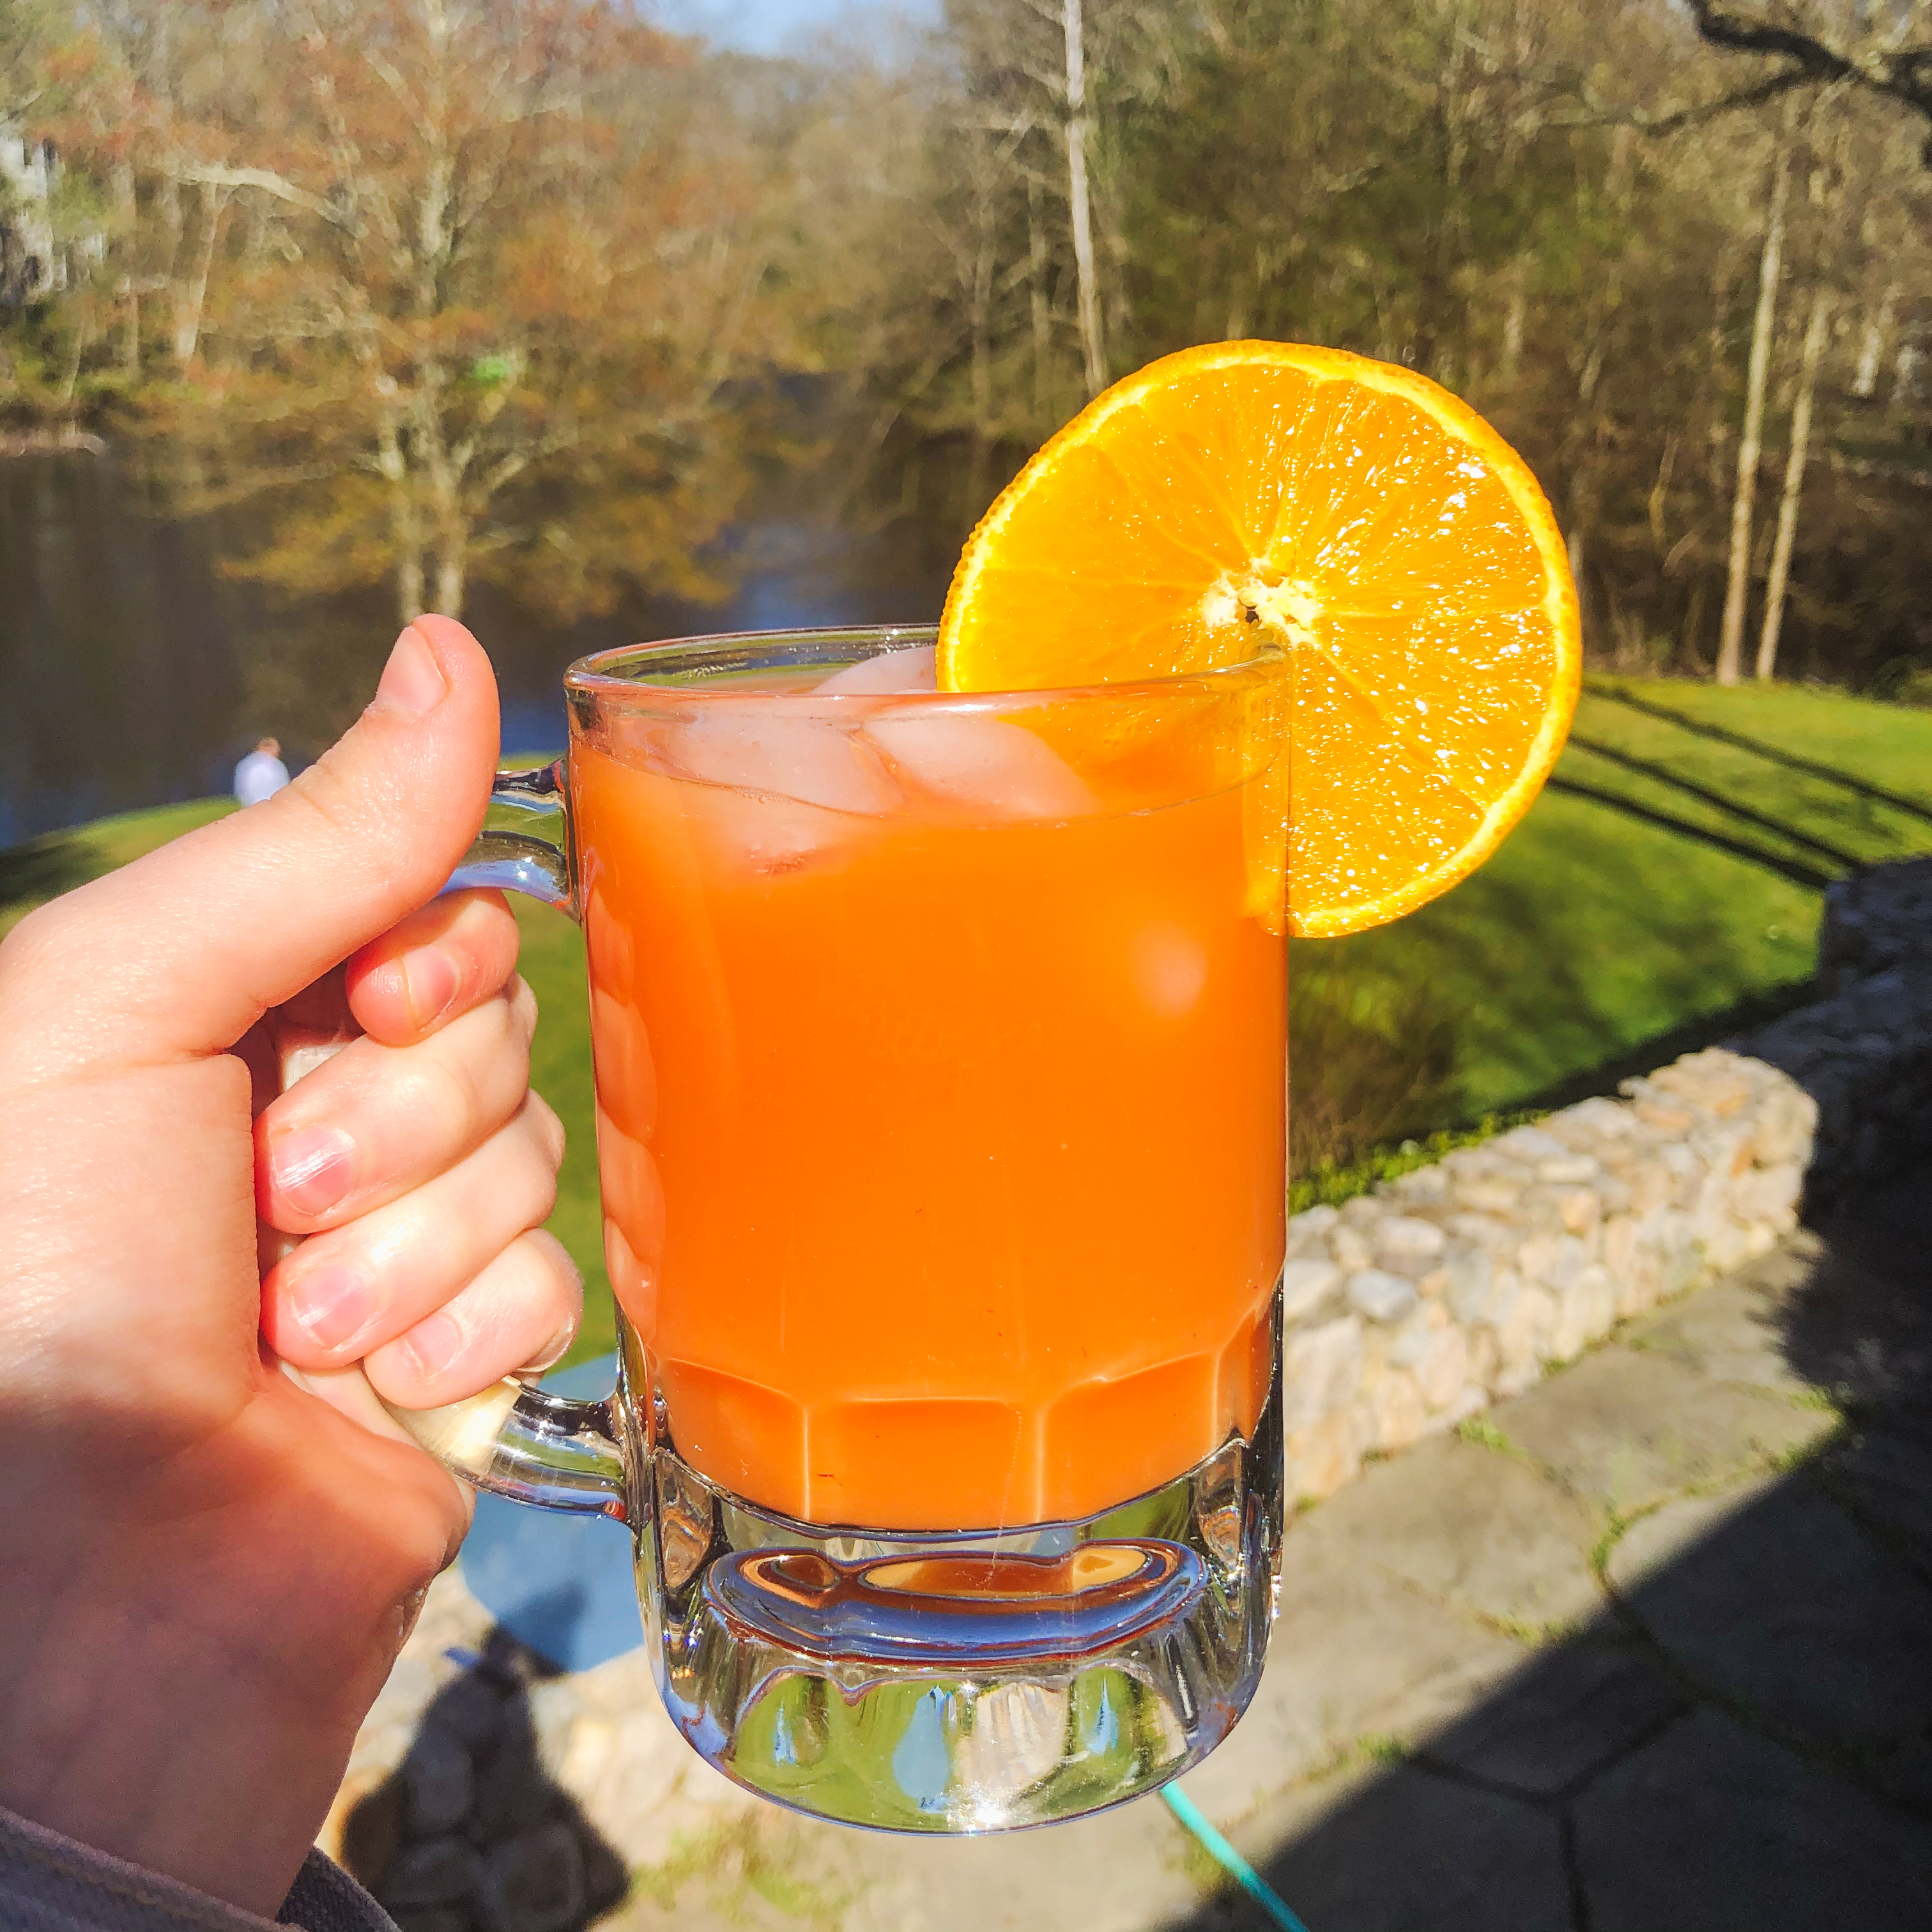 "Orange" Juice - Carrots, Strawberries, Oranges, and more ...